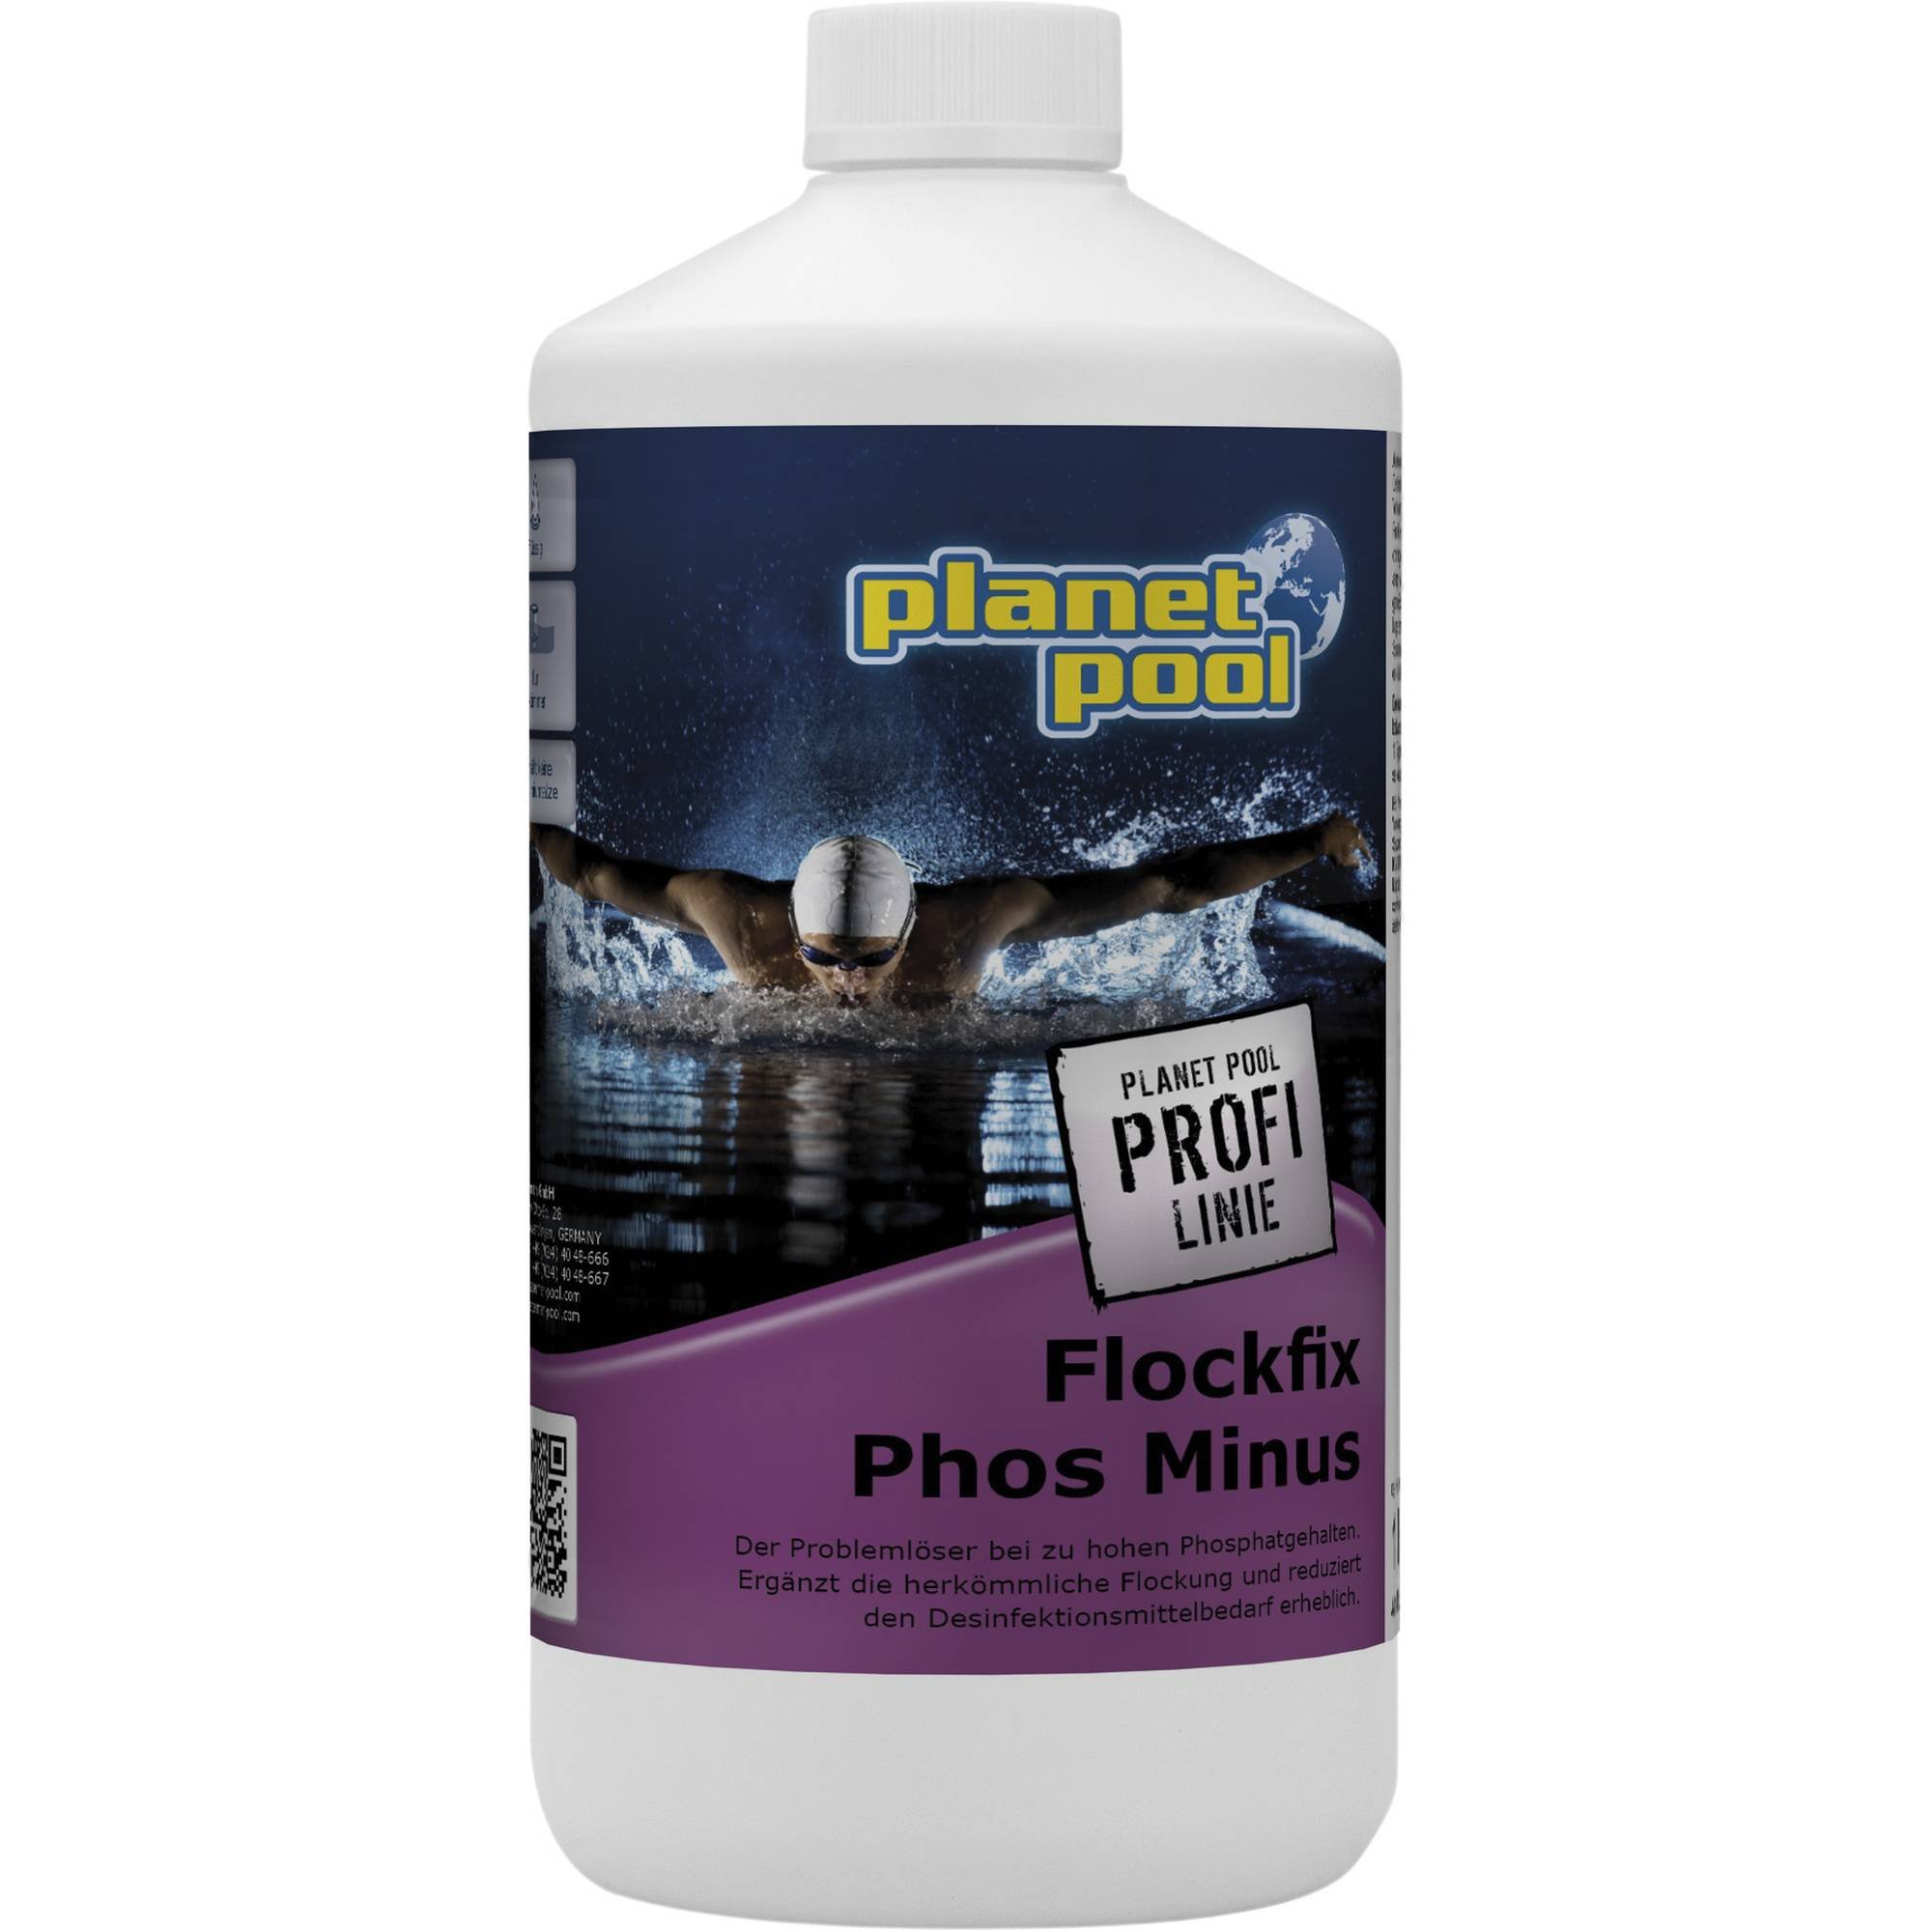 Planet Pool Profi Line - Flockfix Phos Minus, 1 Ltr.